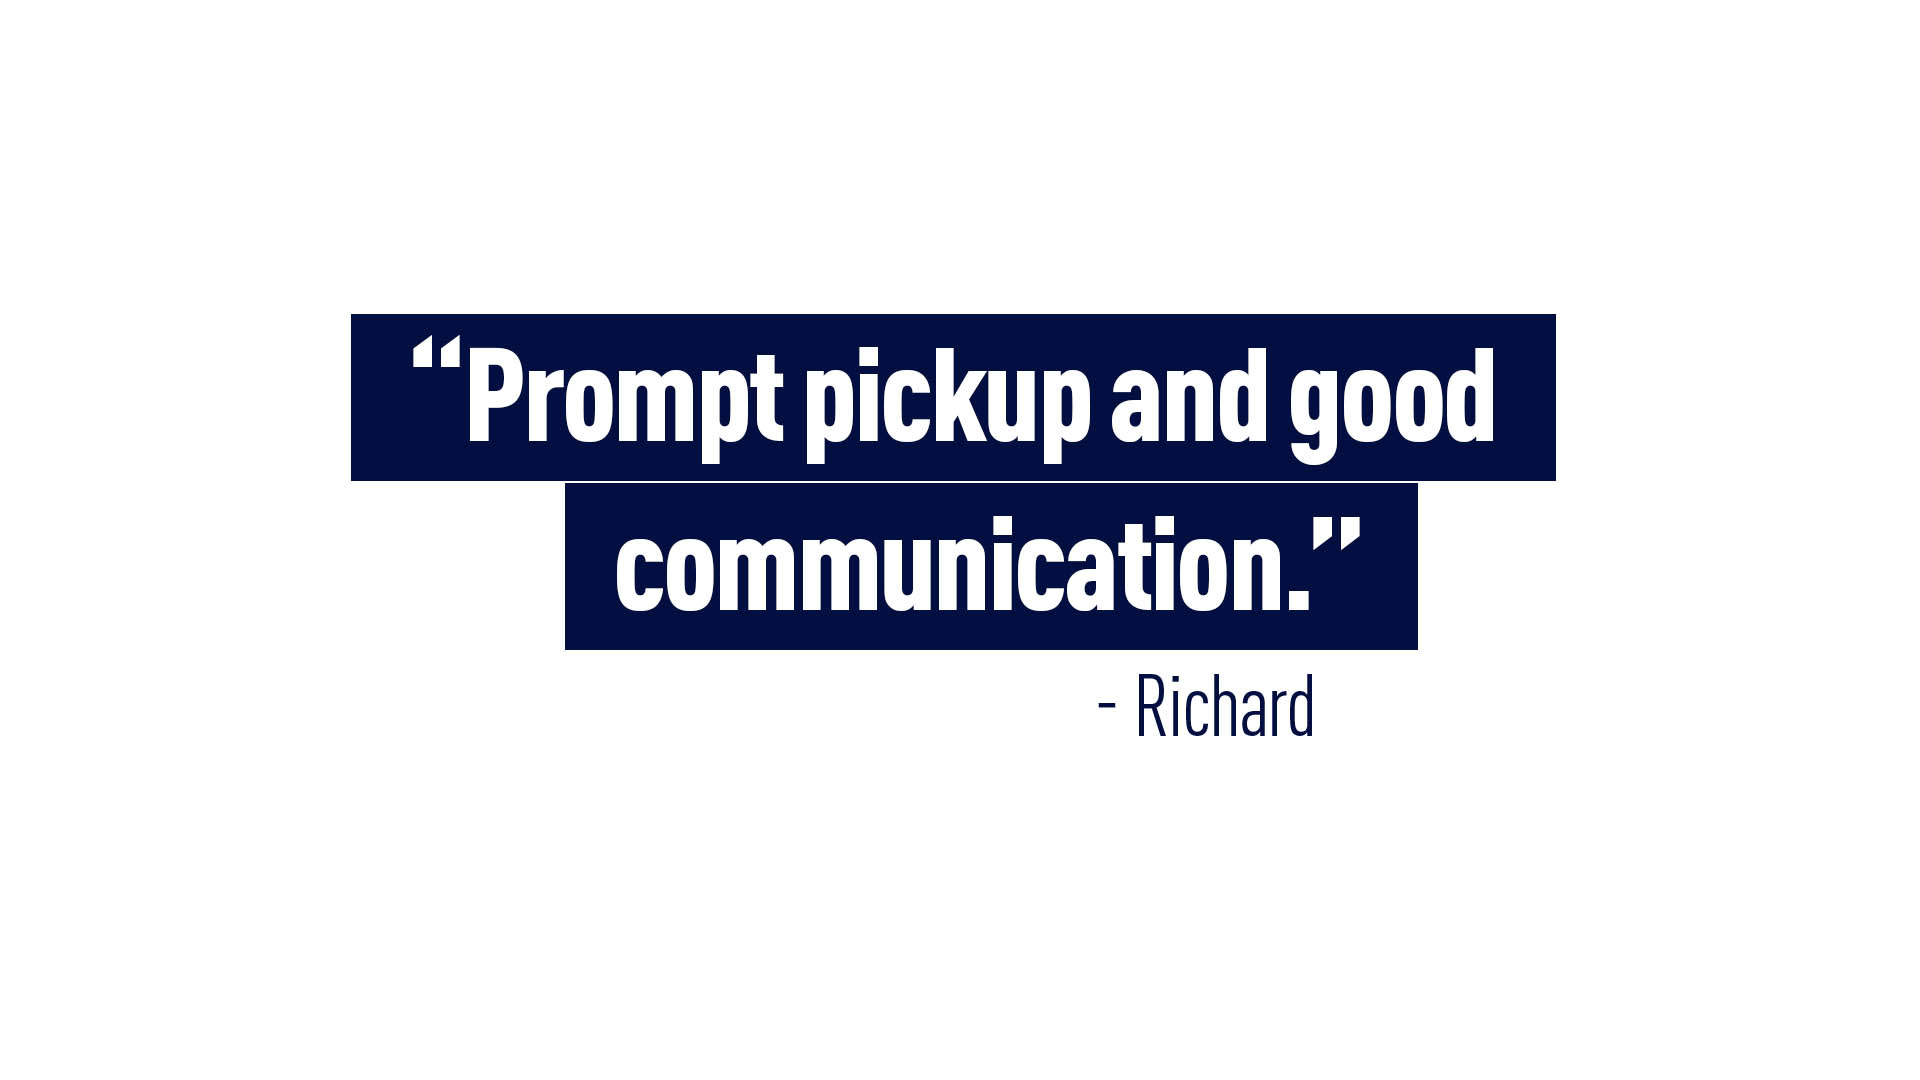 “Prompt pickup and good communication.” - Richard